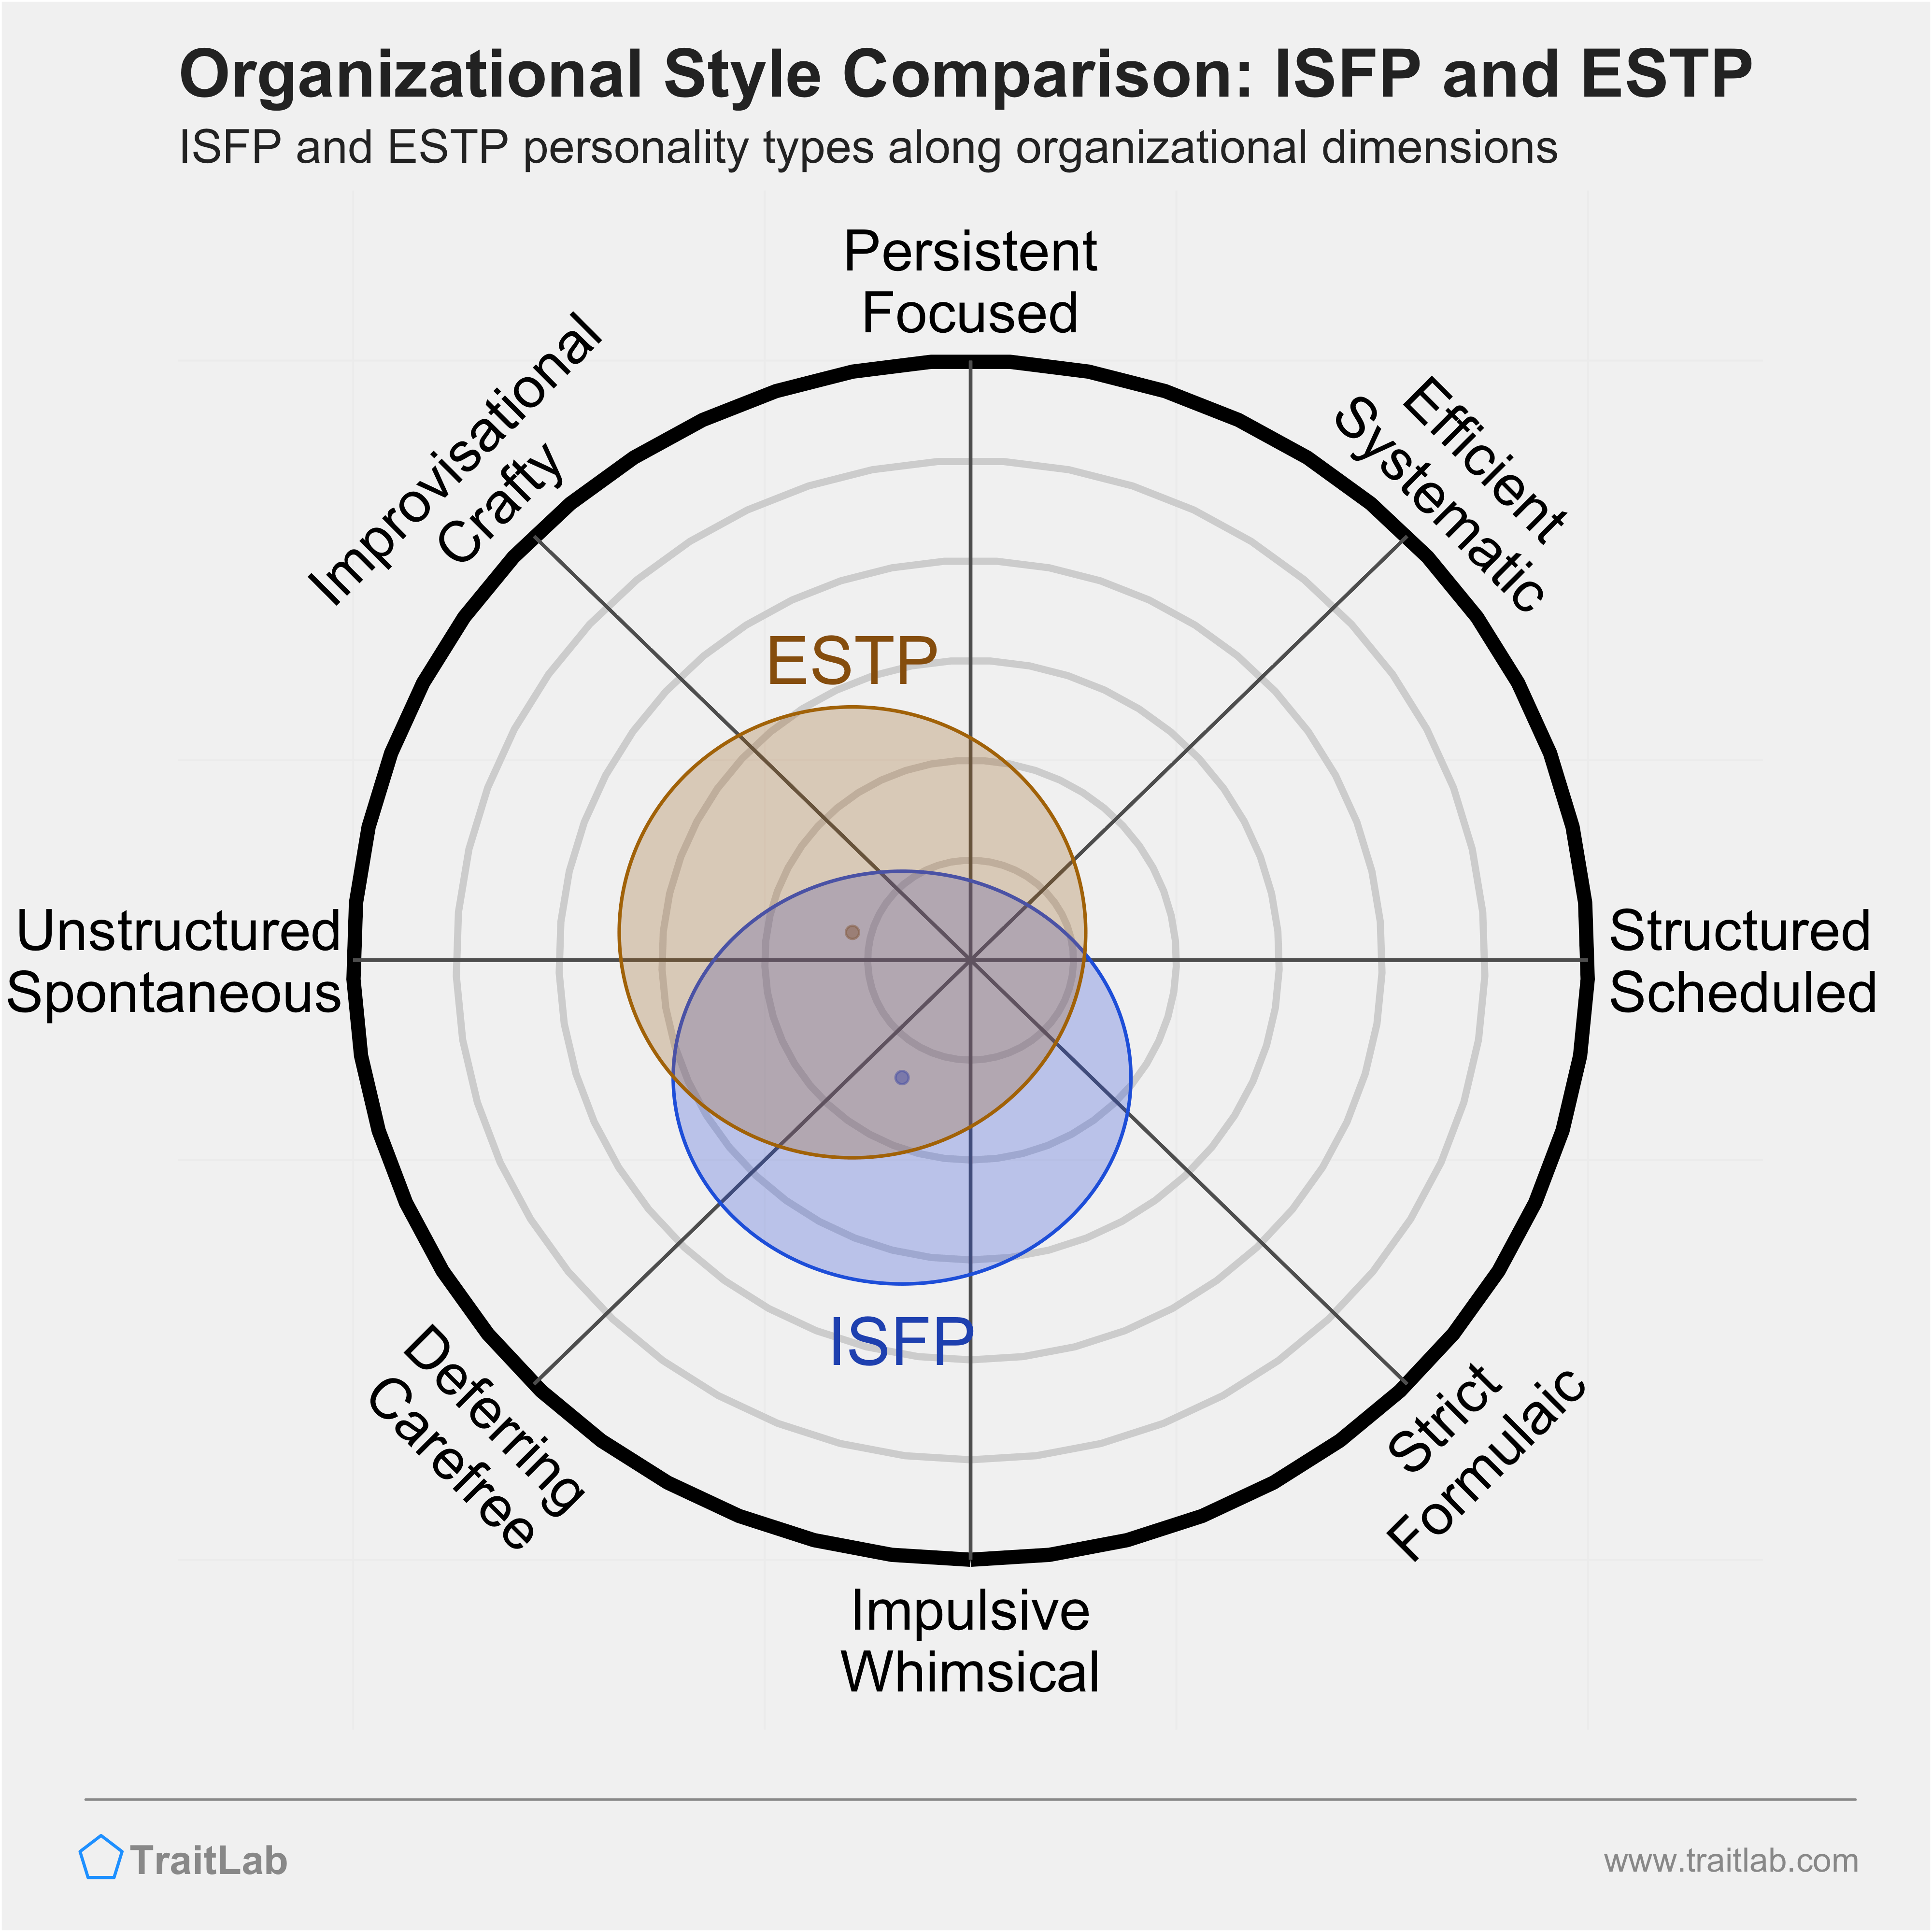 ISFP and ESTP comparison across organizational dimensions